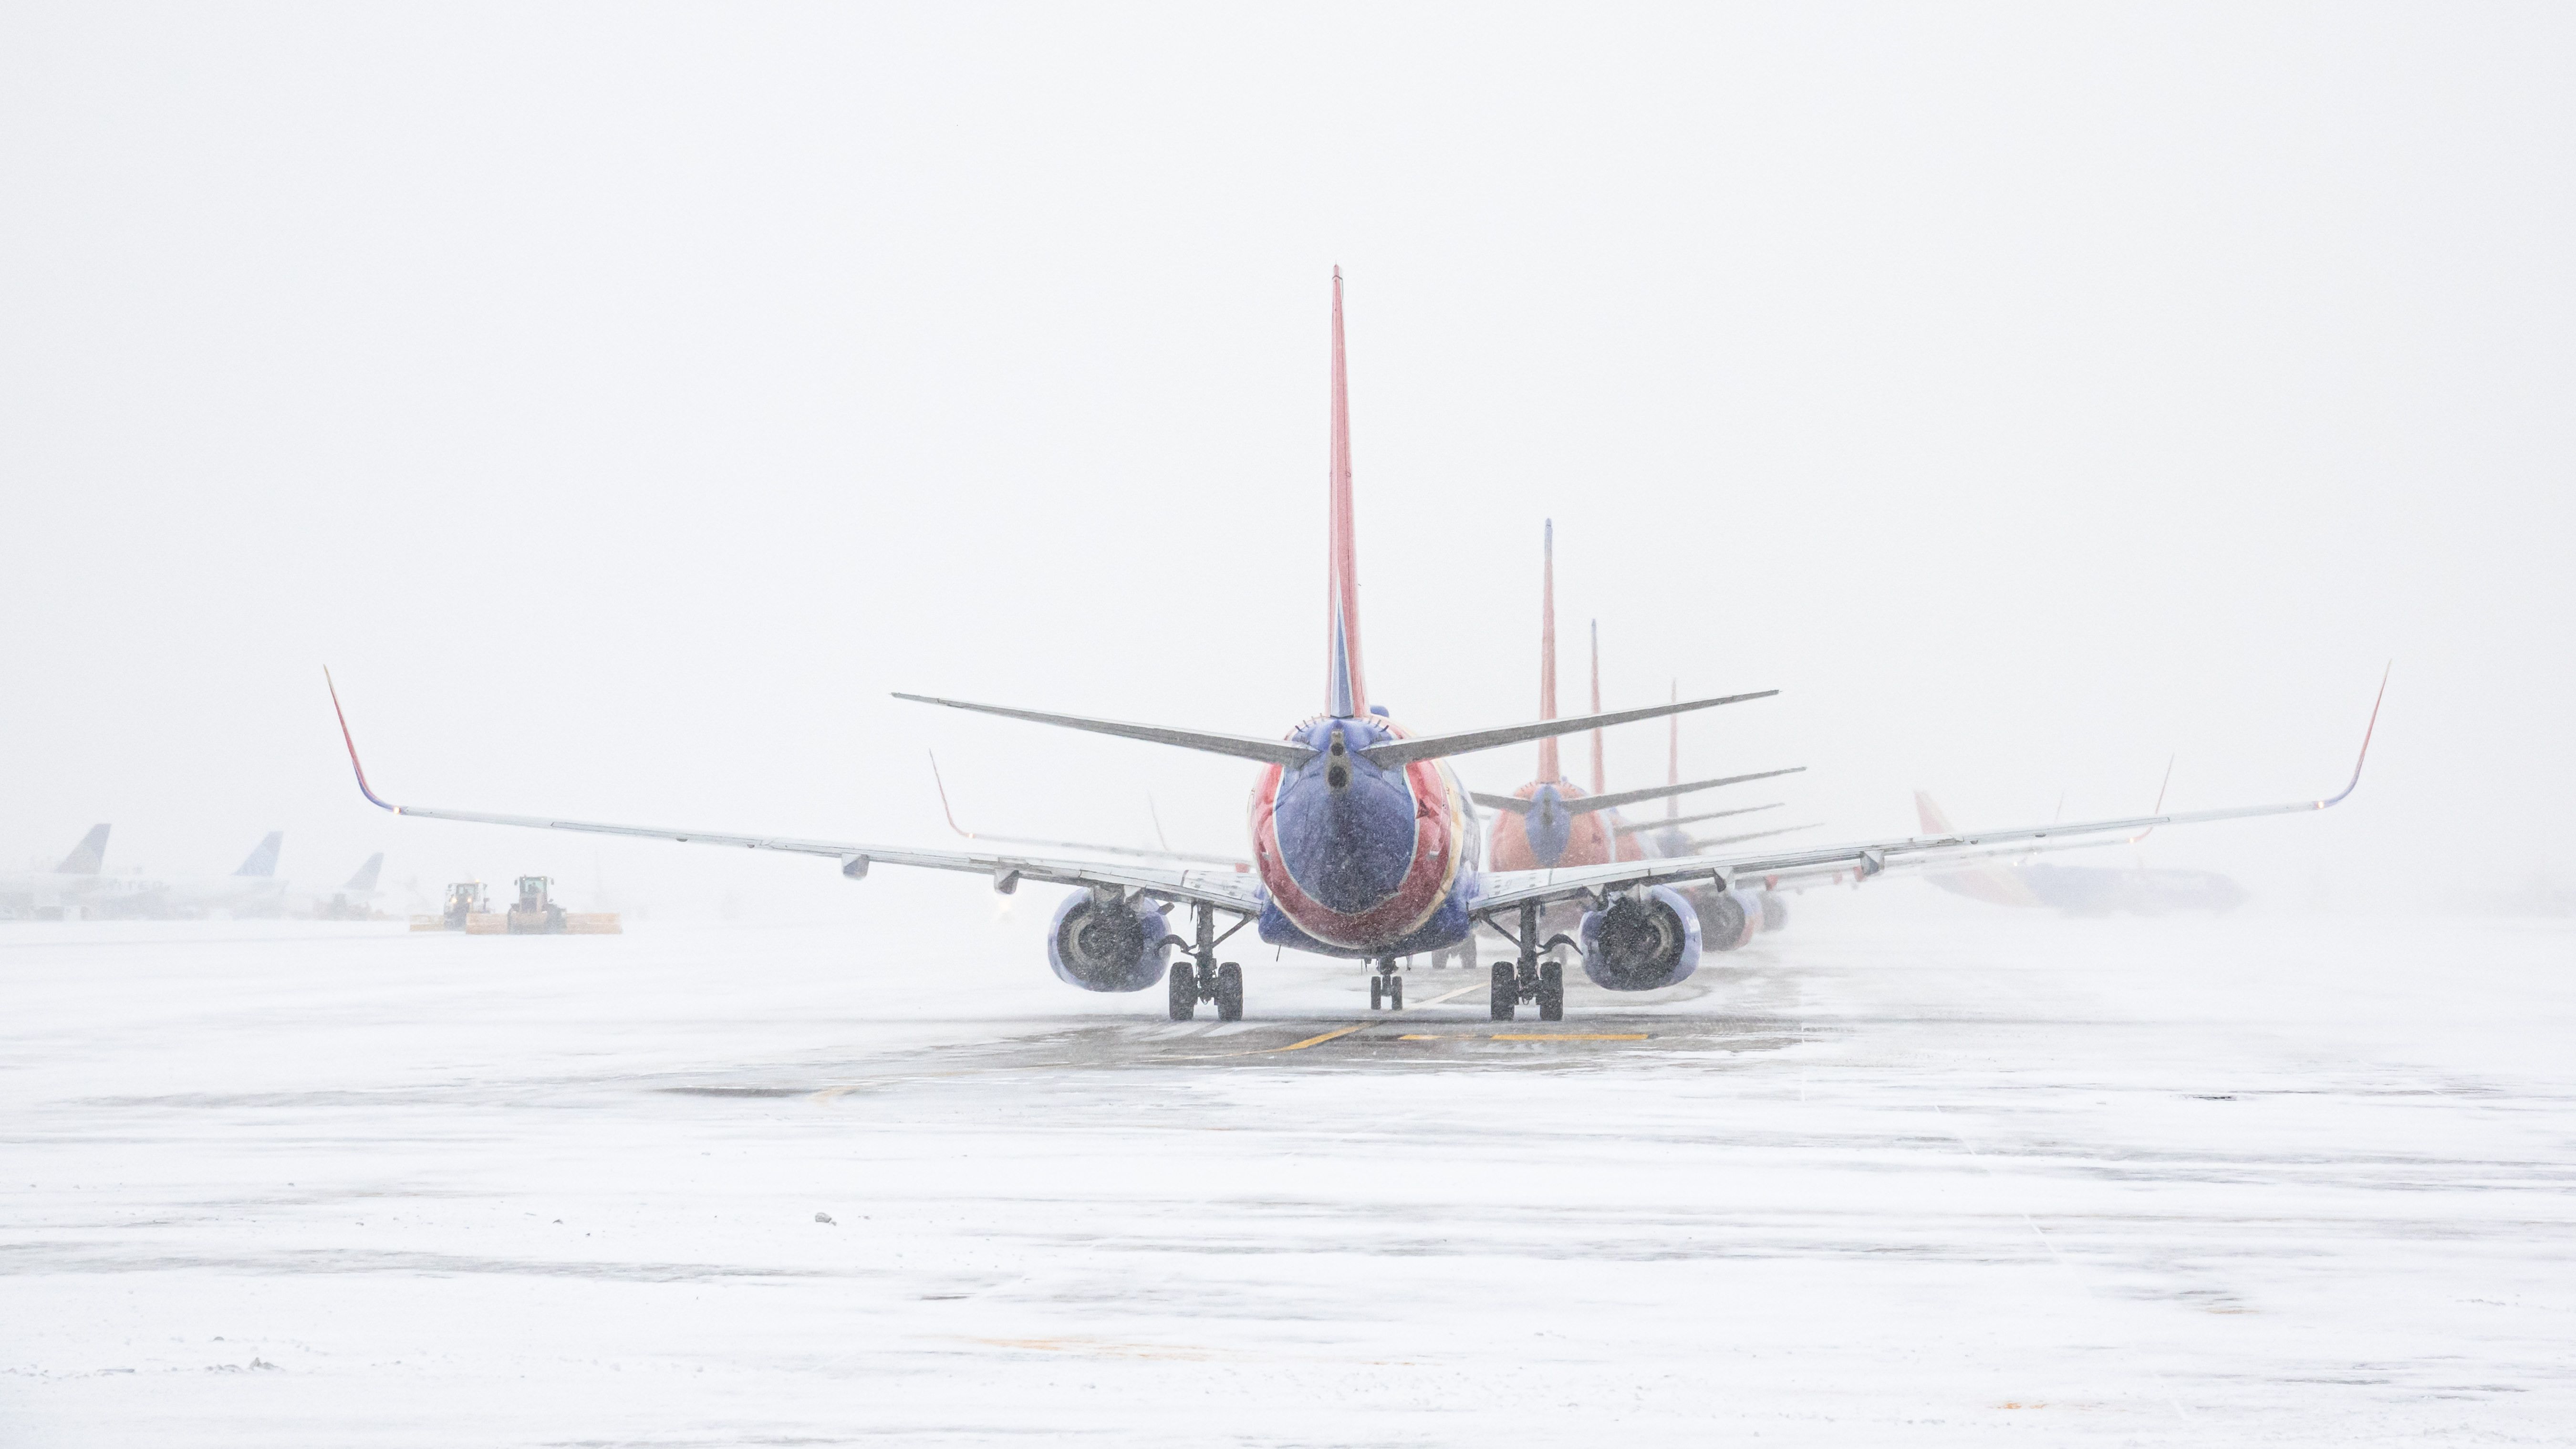 Airplanes at Denver International Airport